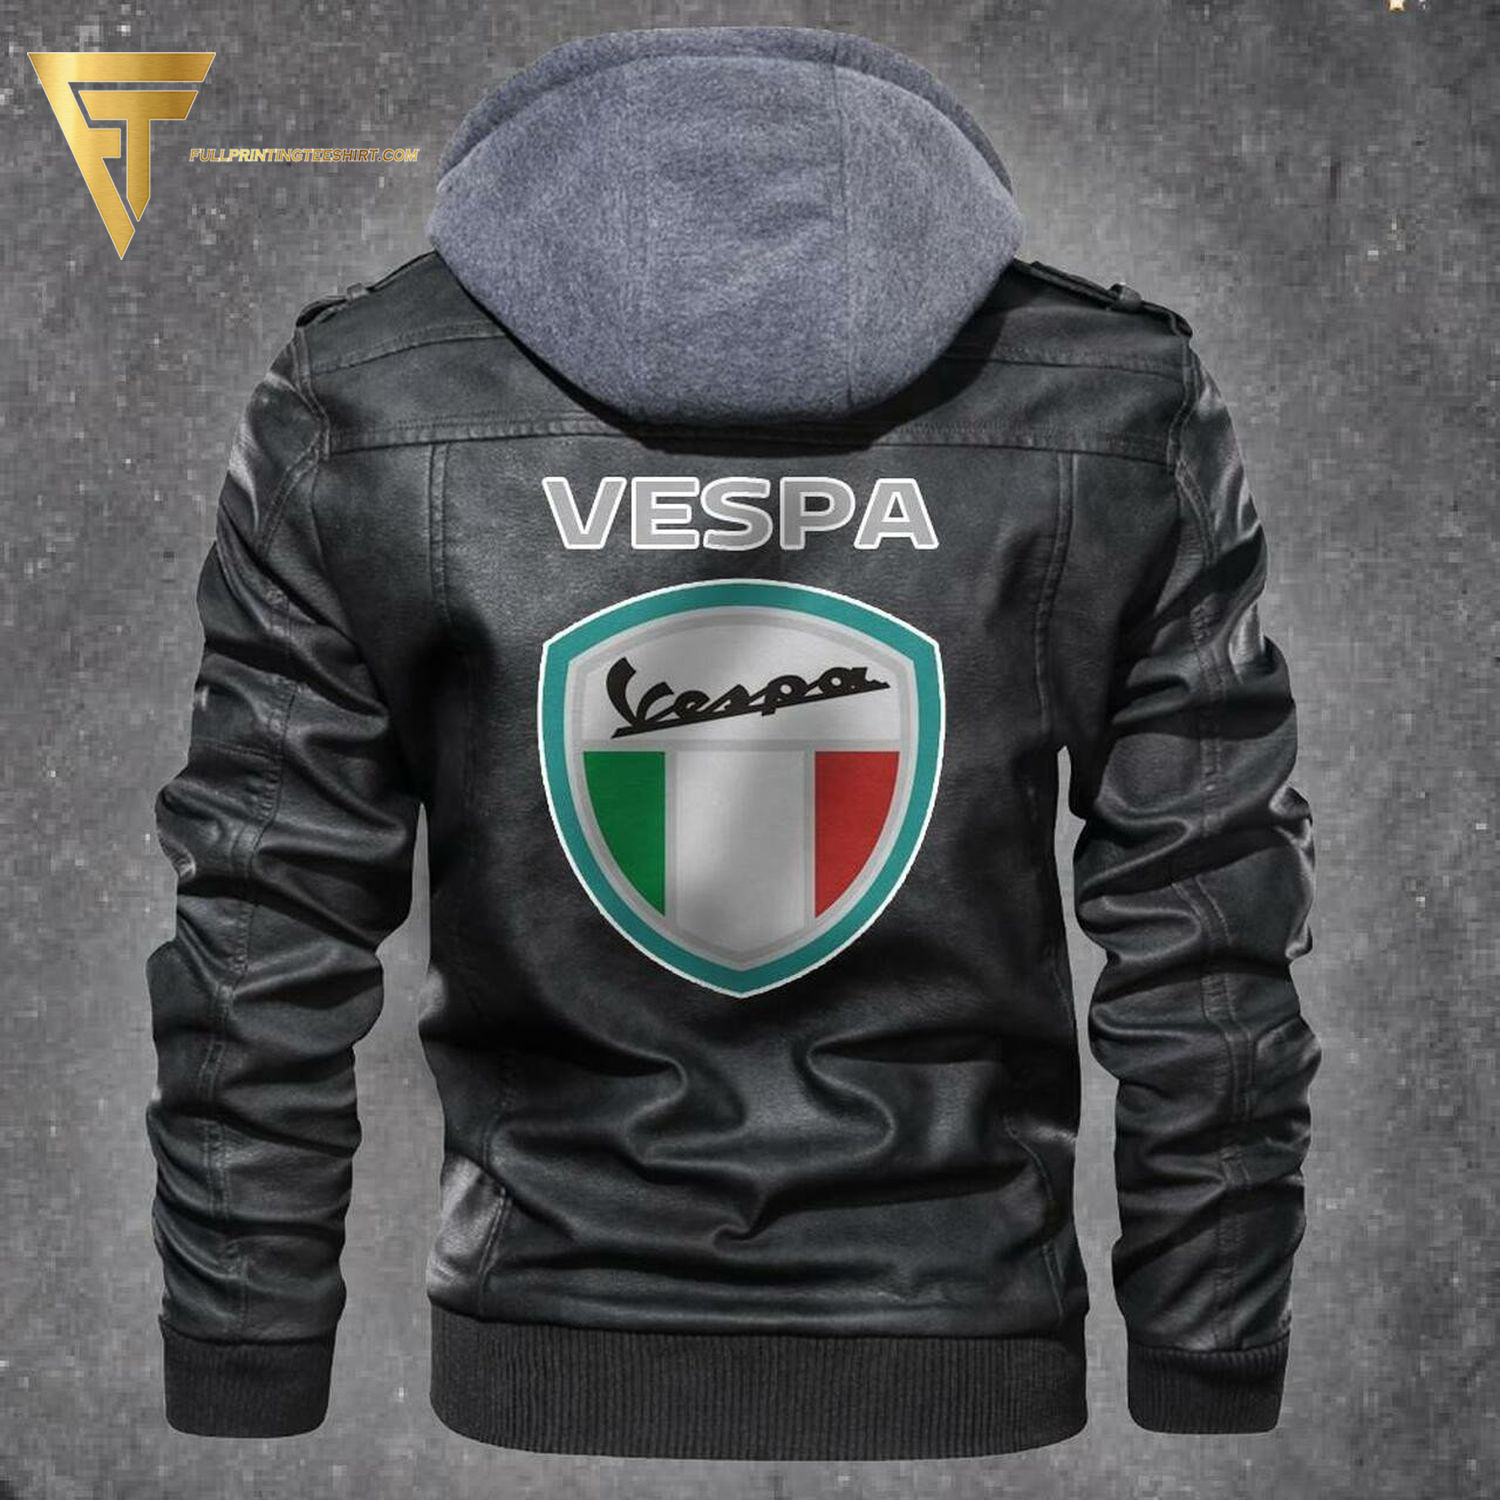 Vespa Motorcycle Symbol Leather Jacket